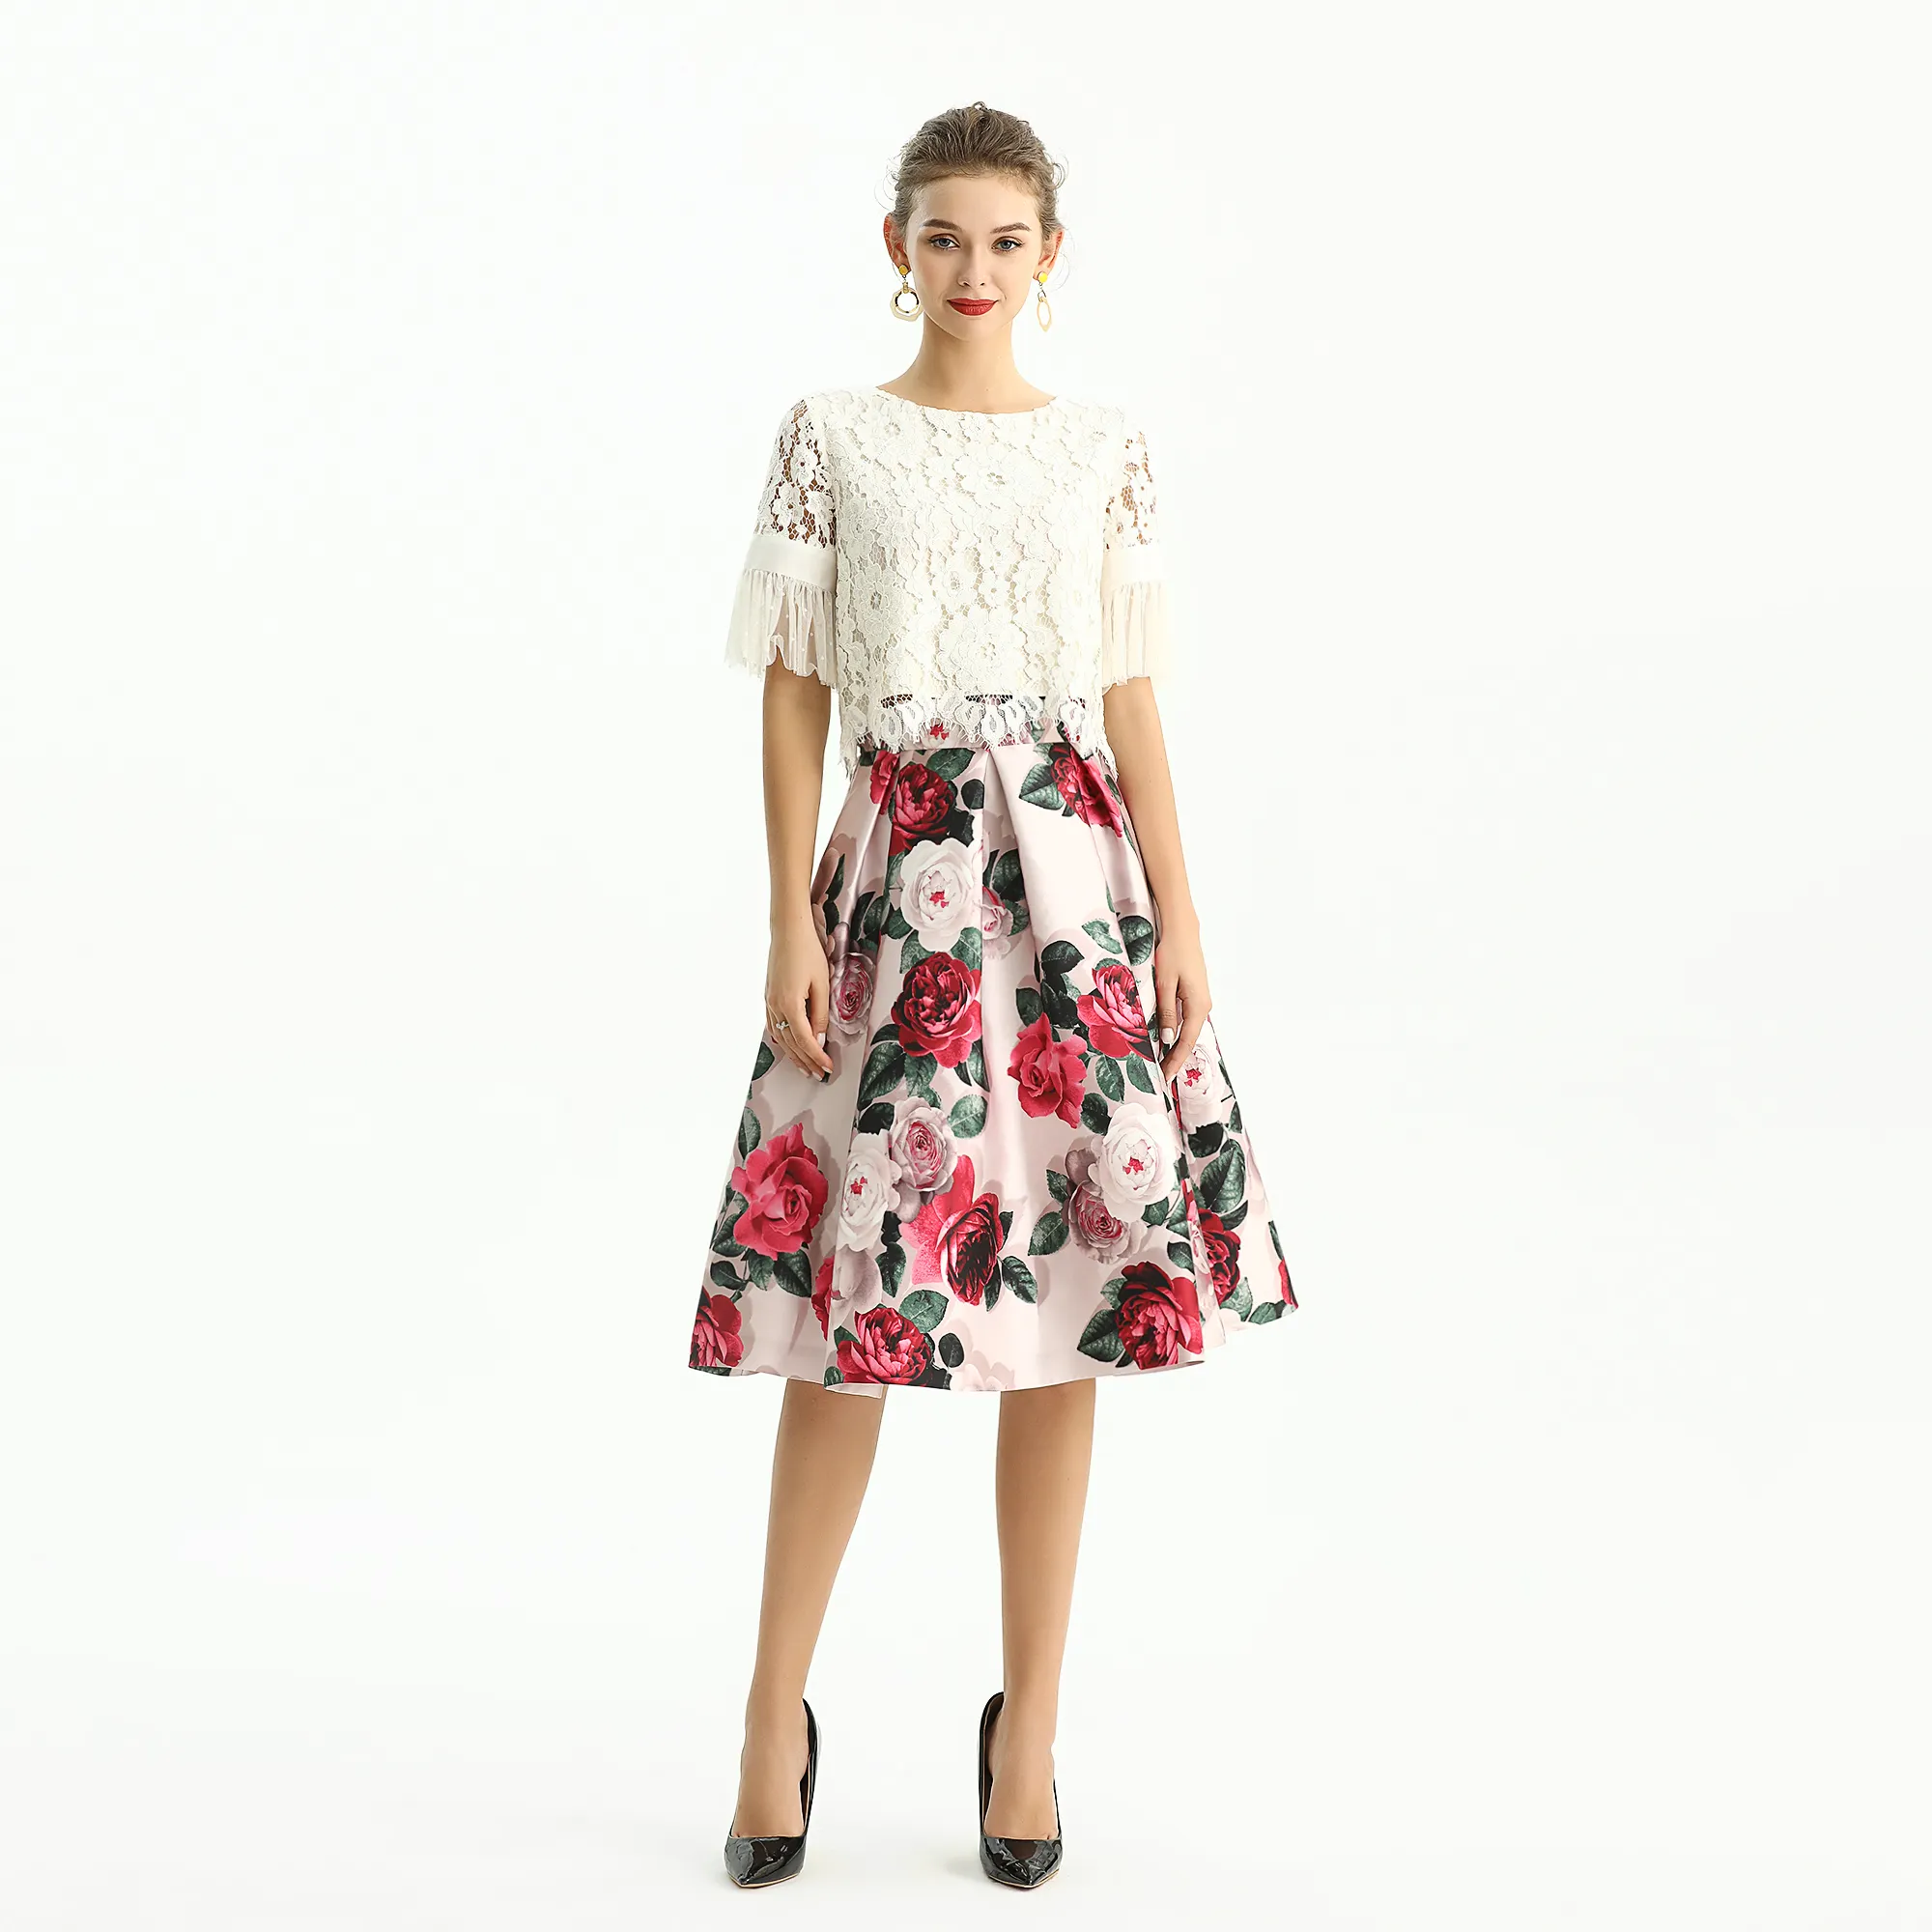 S137 Summer Autumn Fall High Quality Fashion Elegant floral woven knee short length Women Girl Skirts